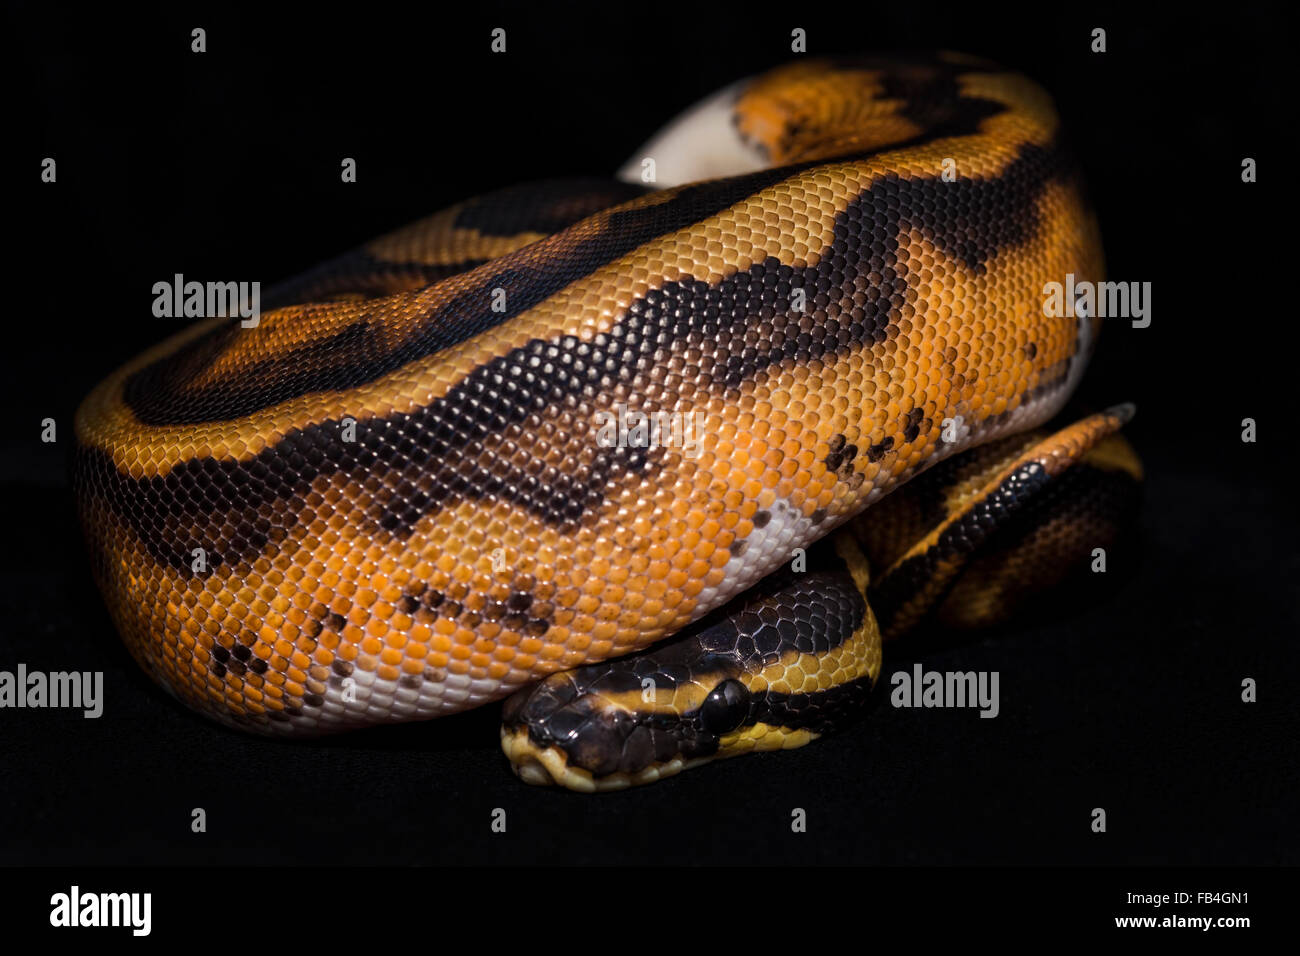 Royal Ball Python, Piebald color mutation. Isolated on black velvet. Stock Photo